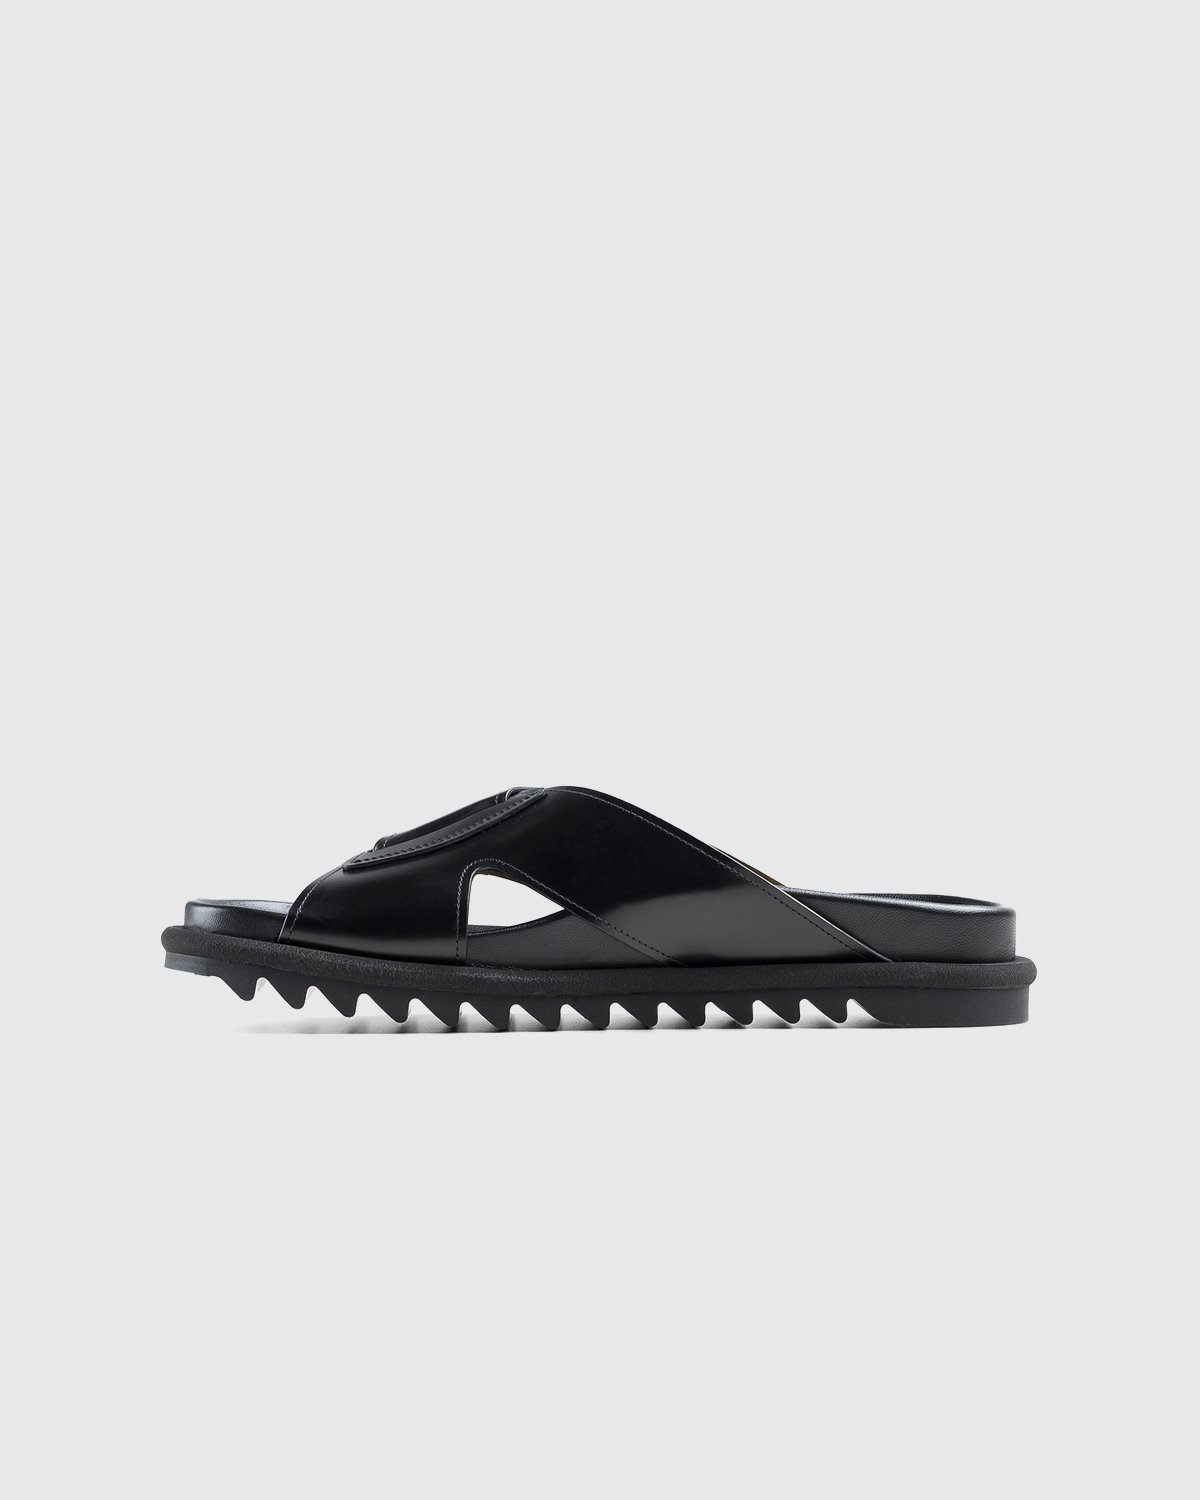 Dries van Noten - Leather Criss-Cross Sandals Black - Footwear - Black - Image 2